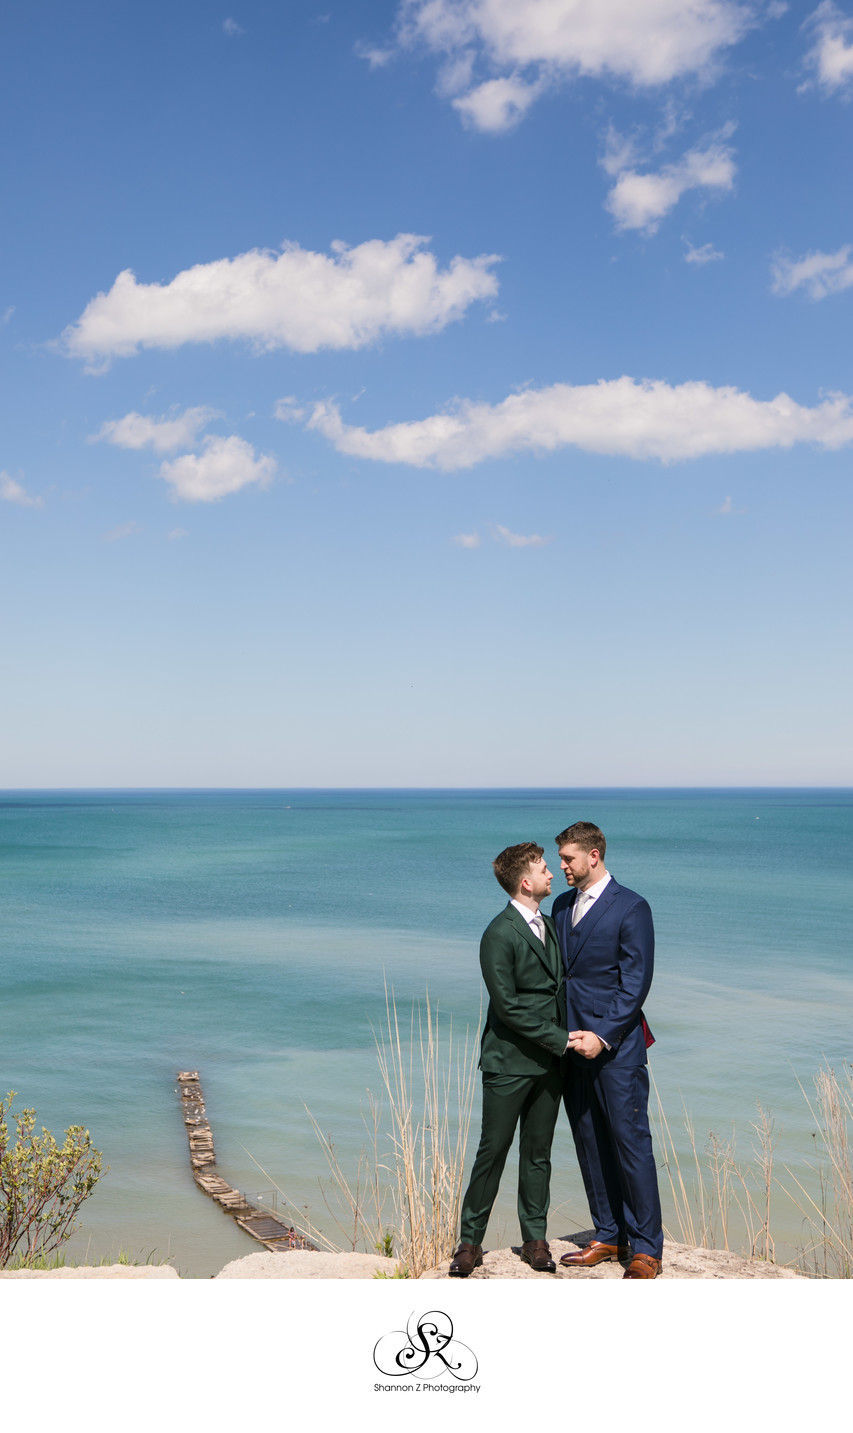 Lake Michigan: Weddings